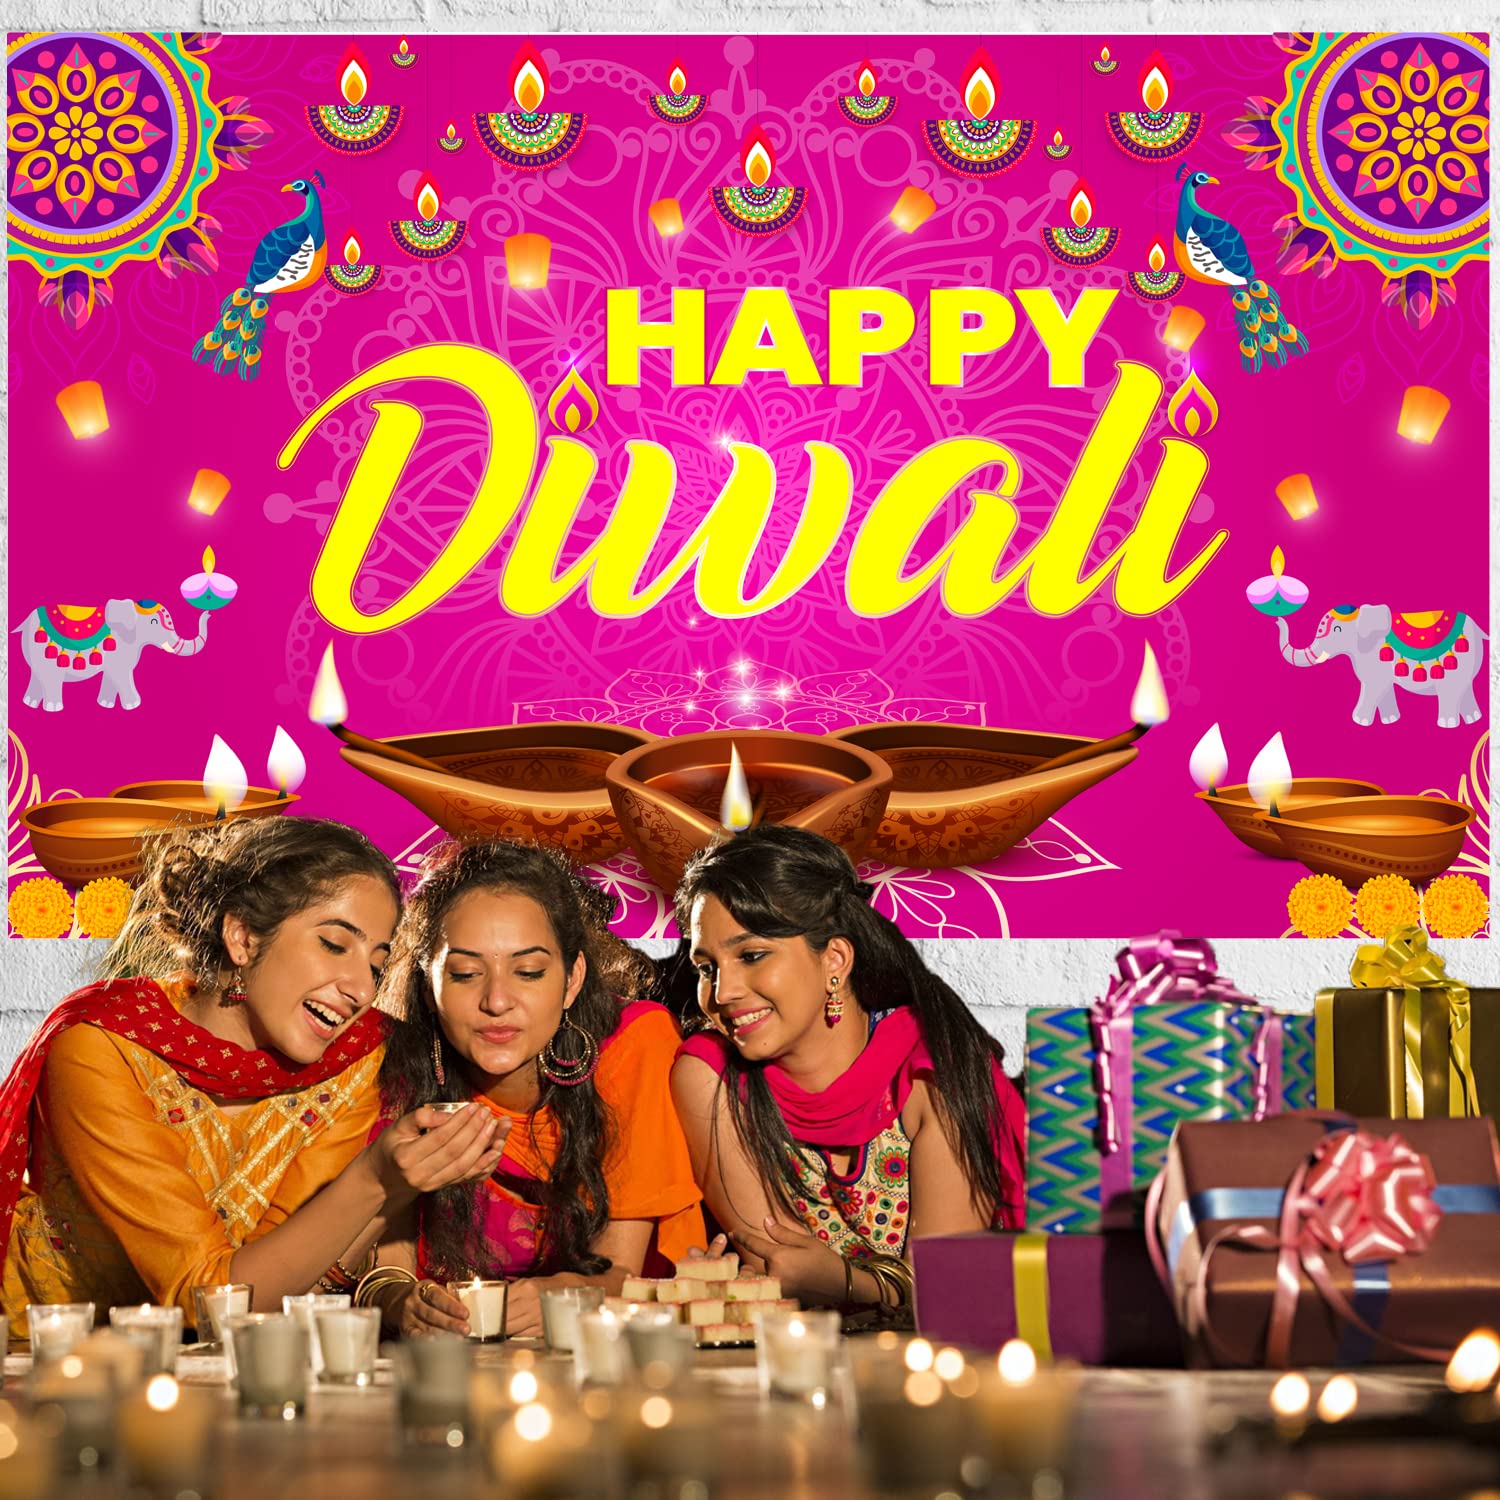 Large 71" X 43" Happy Diwali Backdrop, Happy Diwali Decorations Diwali Backdrops for Wall, Happy Diwali Banner India Festival of Lights, Diwali Decorations Backdrop Deepavali Decorations